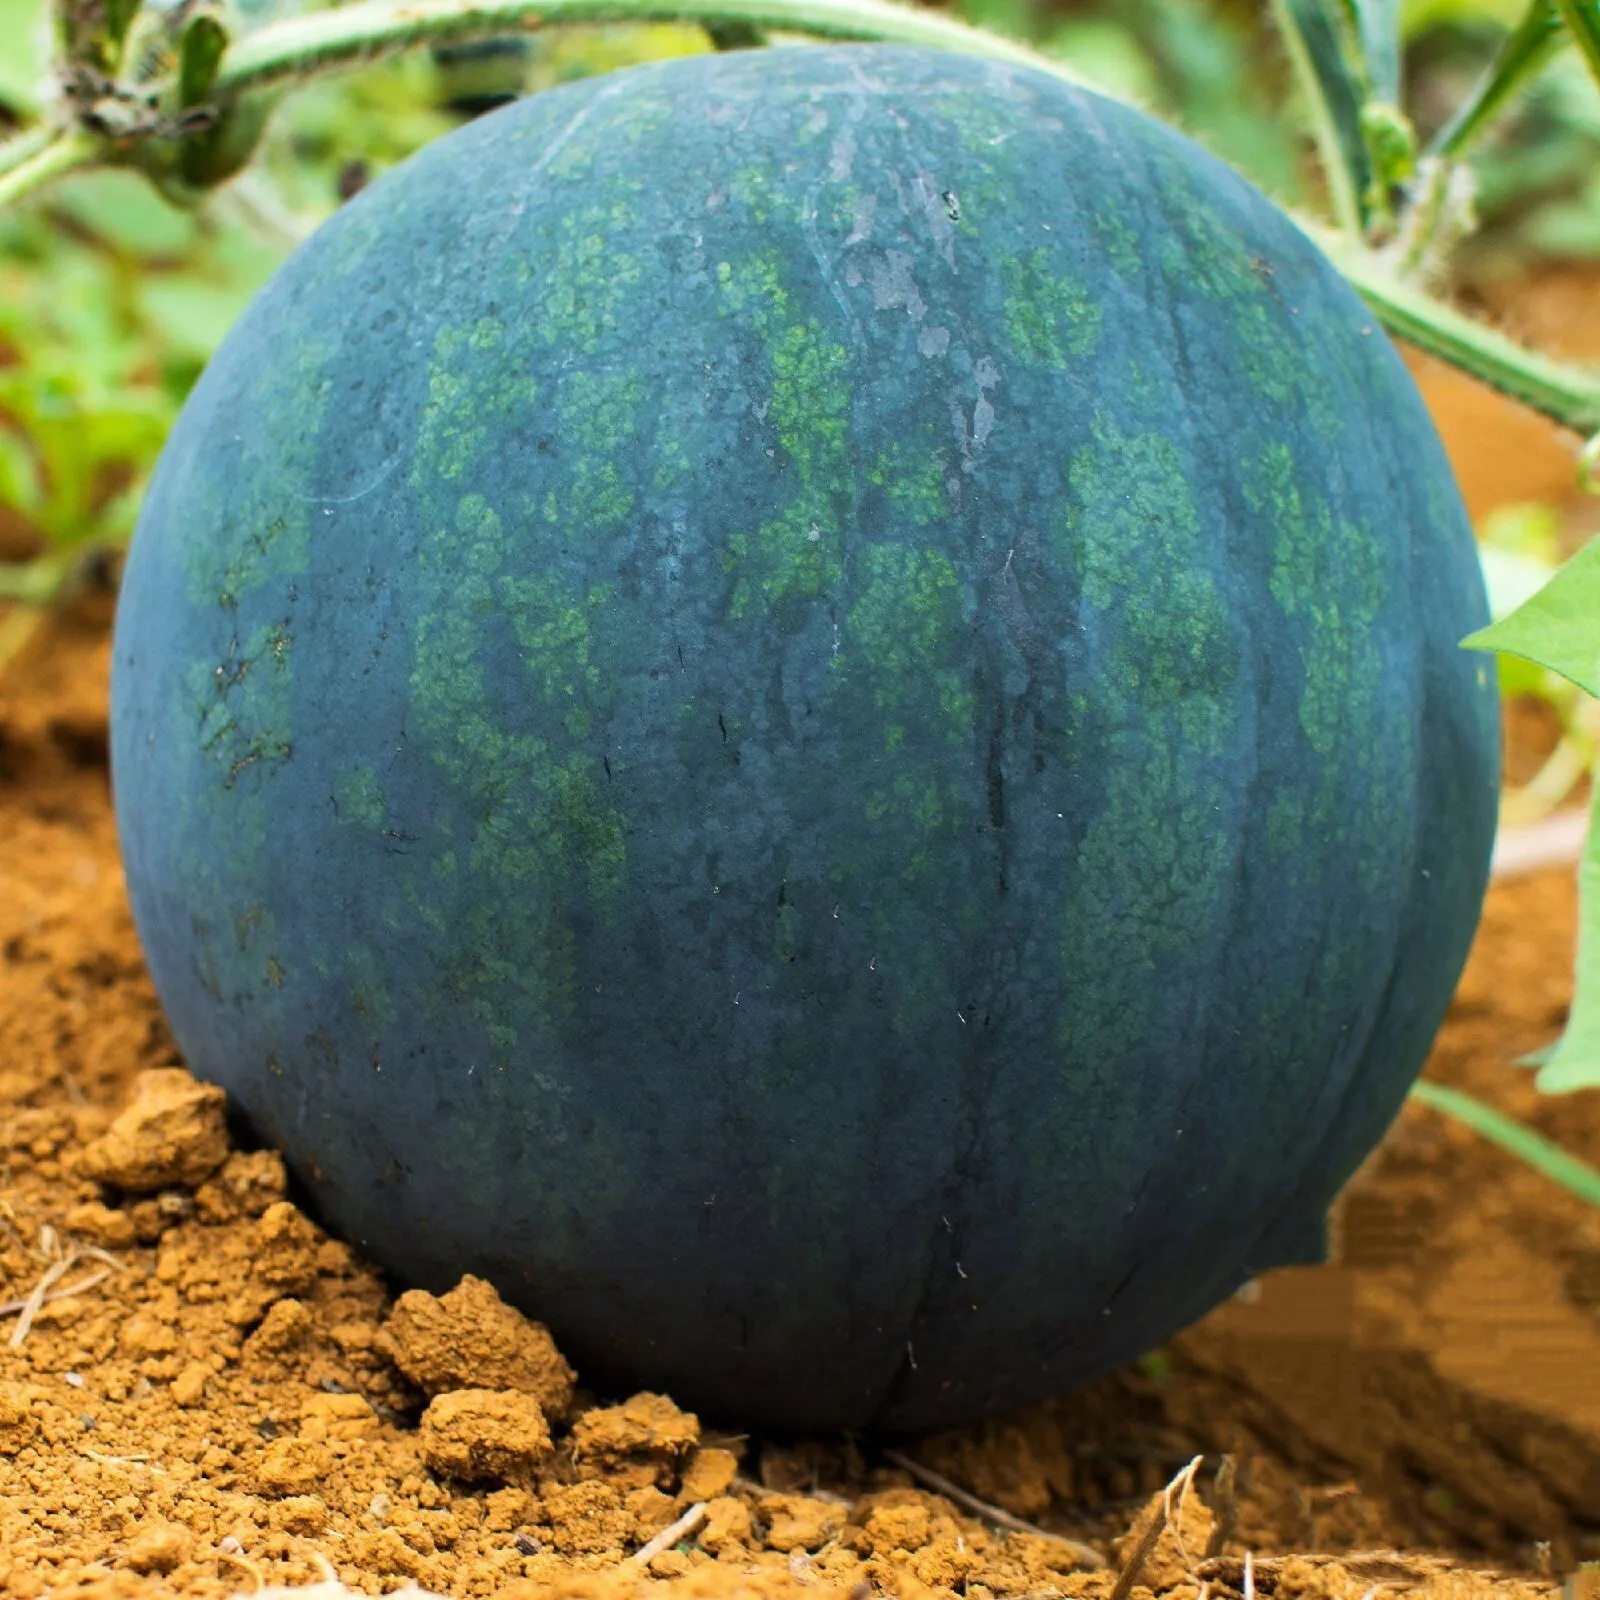 Giant black watermelon seeds Fruit NON-GMO 10+ Seeds - $10.65